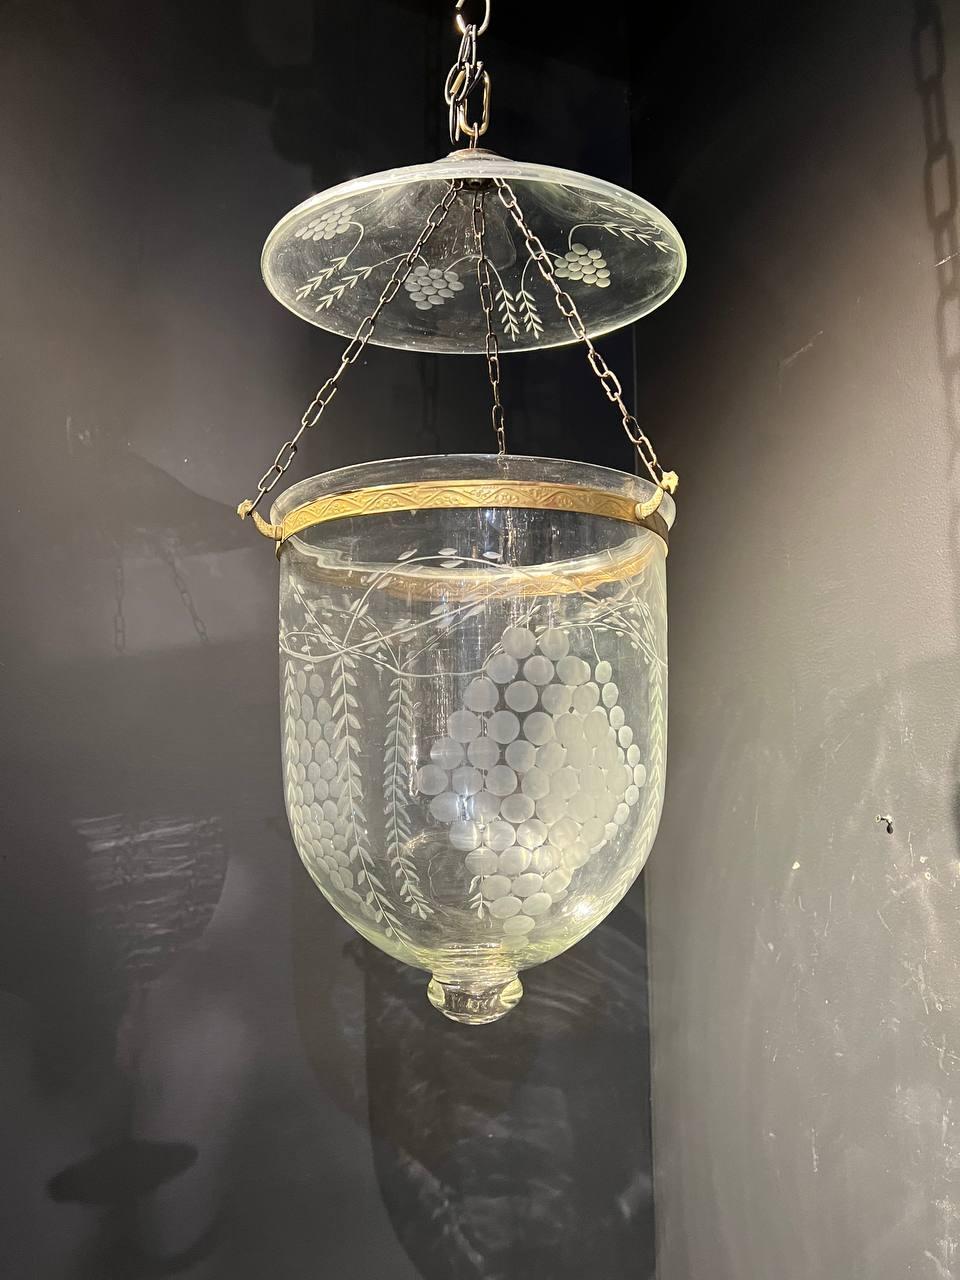 A circa 1940's glass lantern with grape design and three interior lights